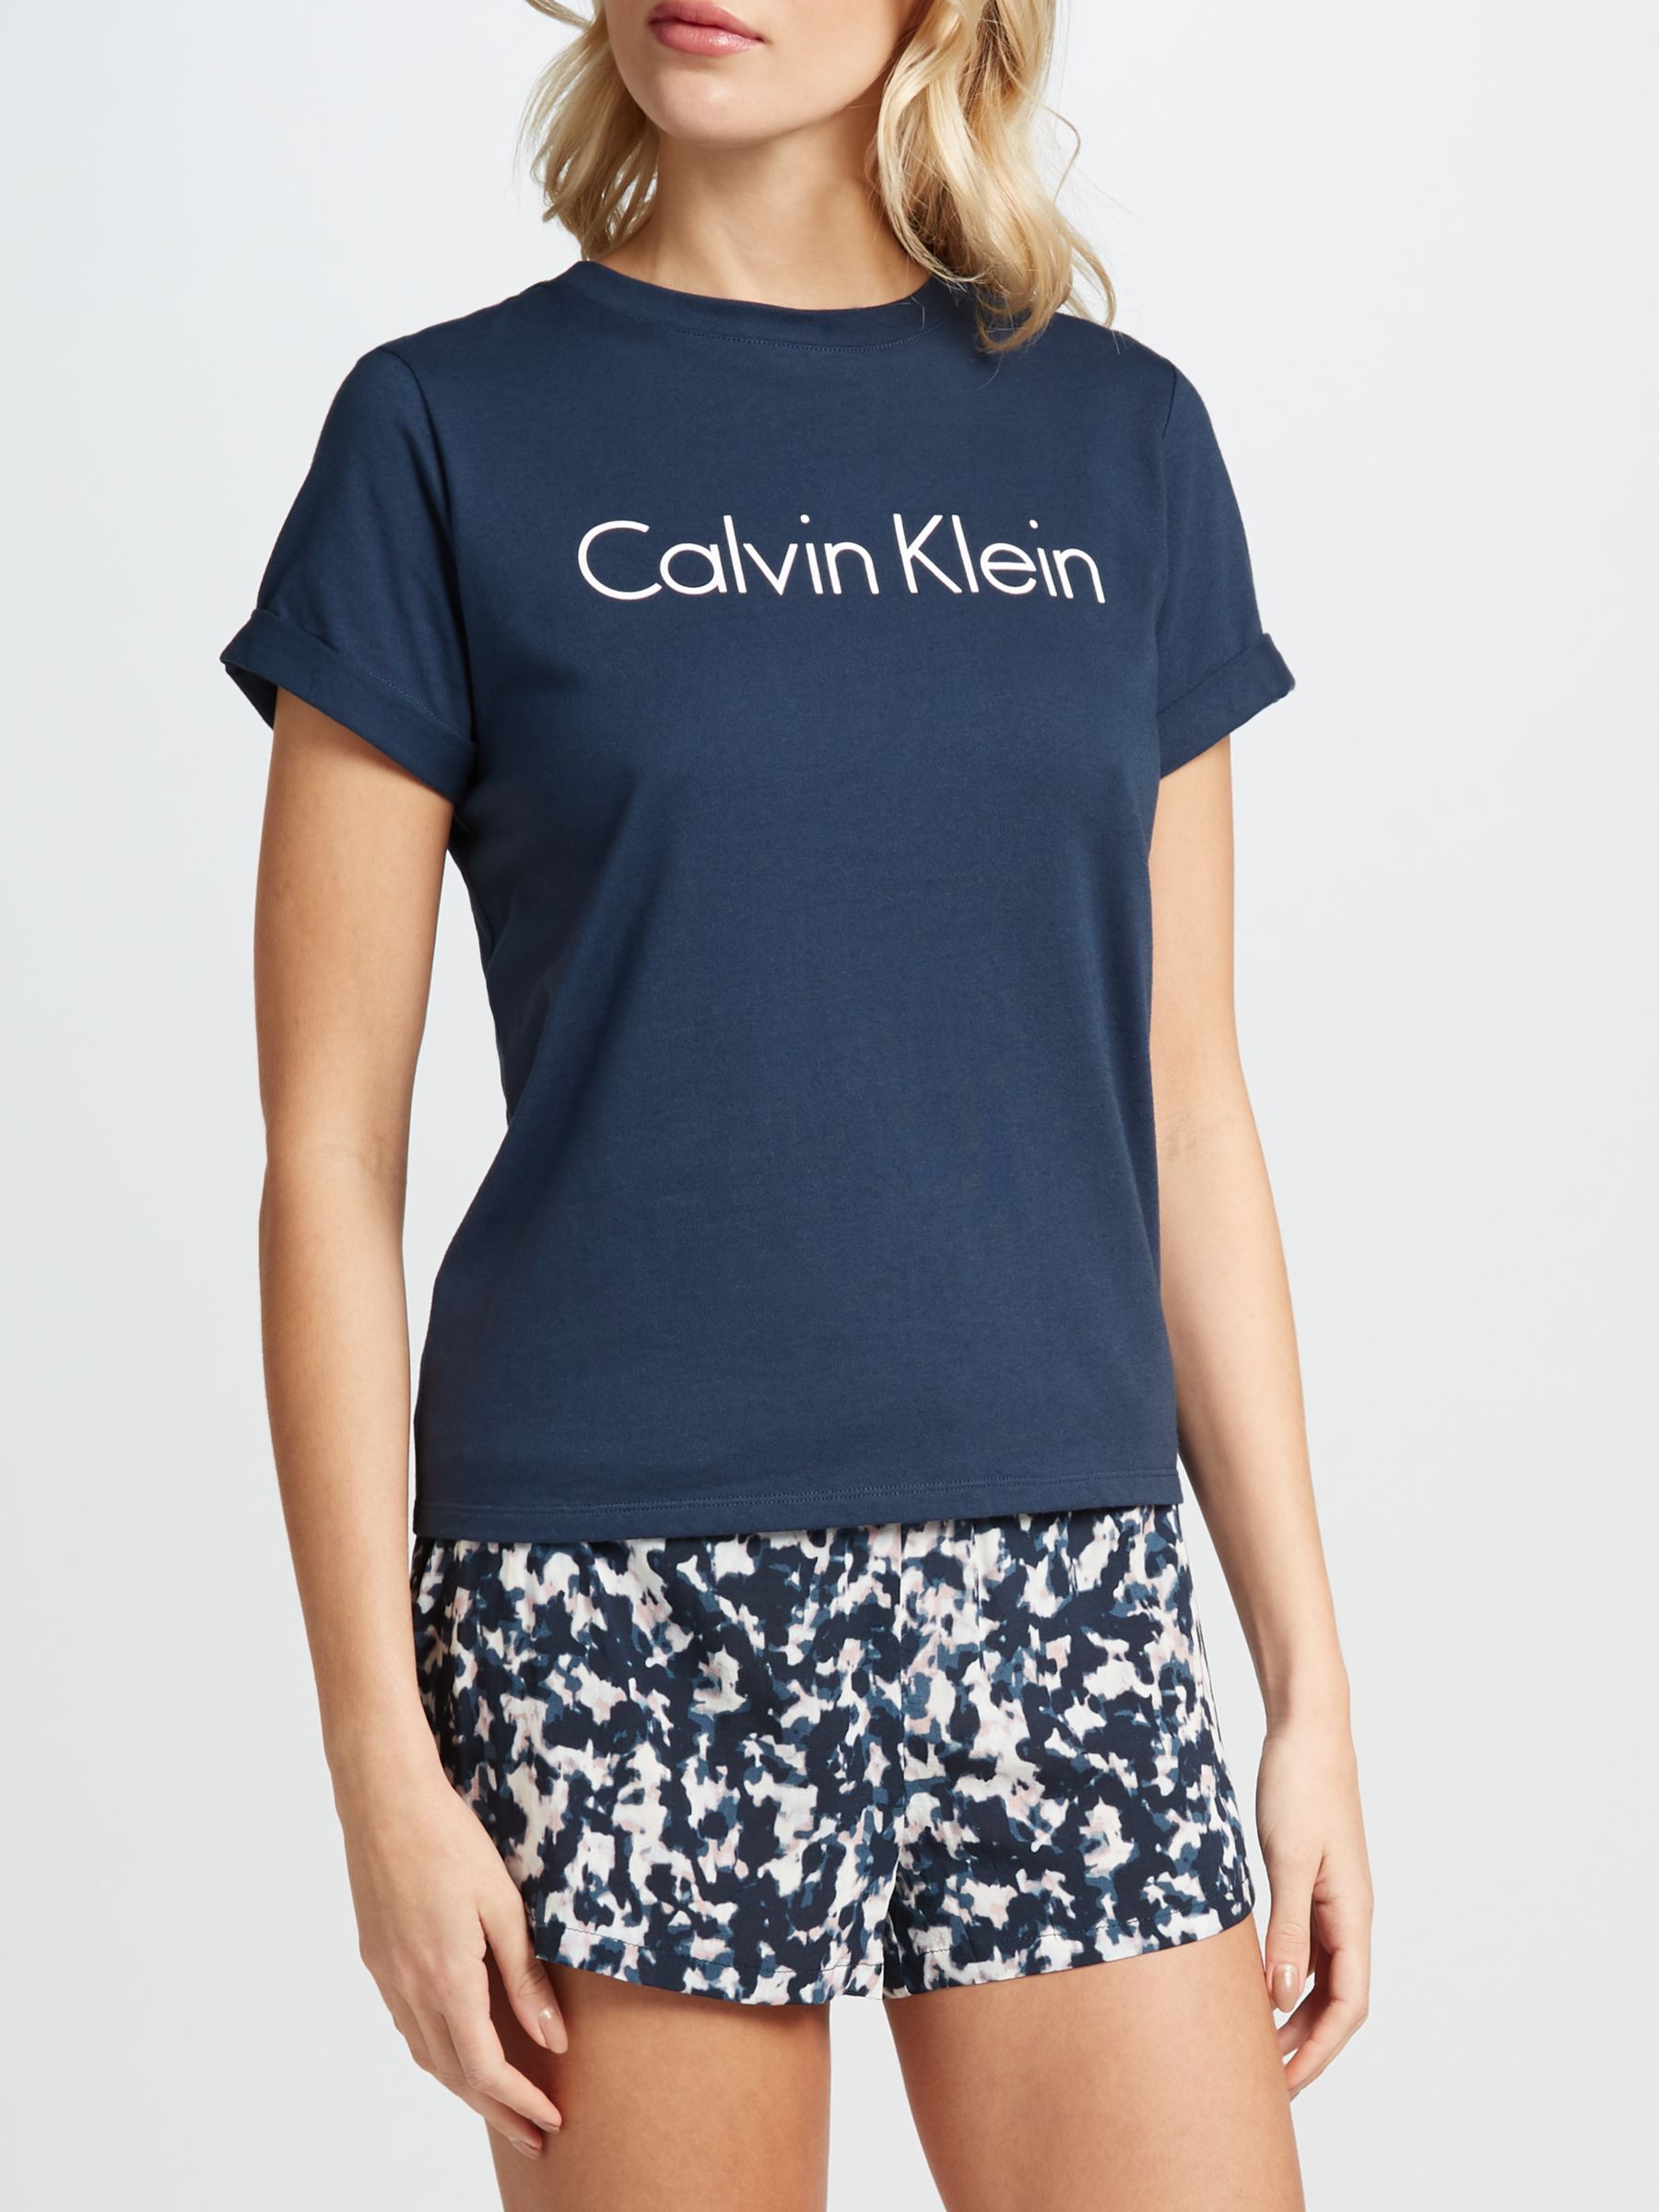 calvin klein navy blue t shirt